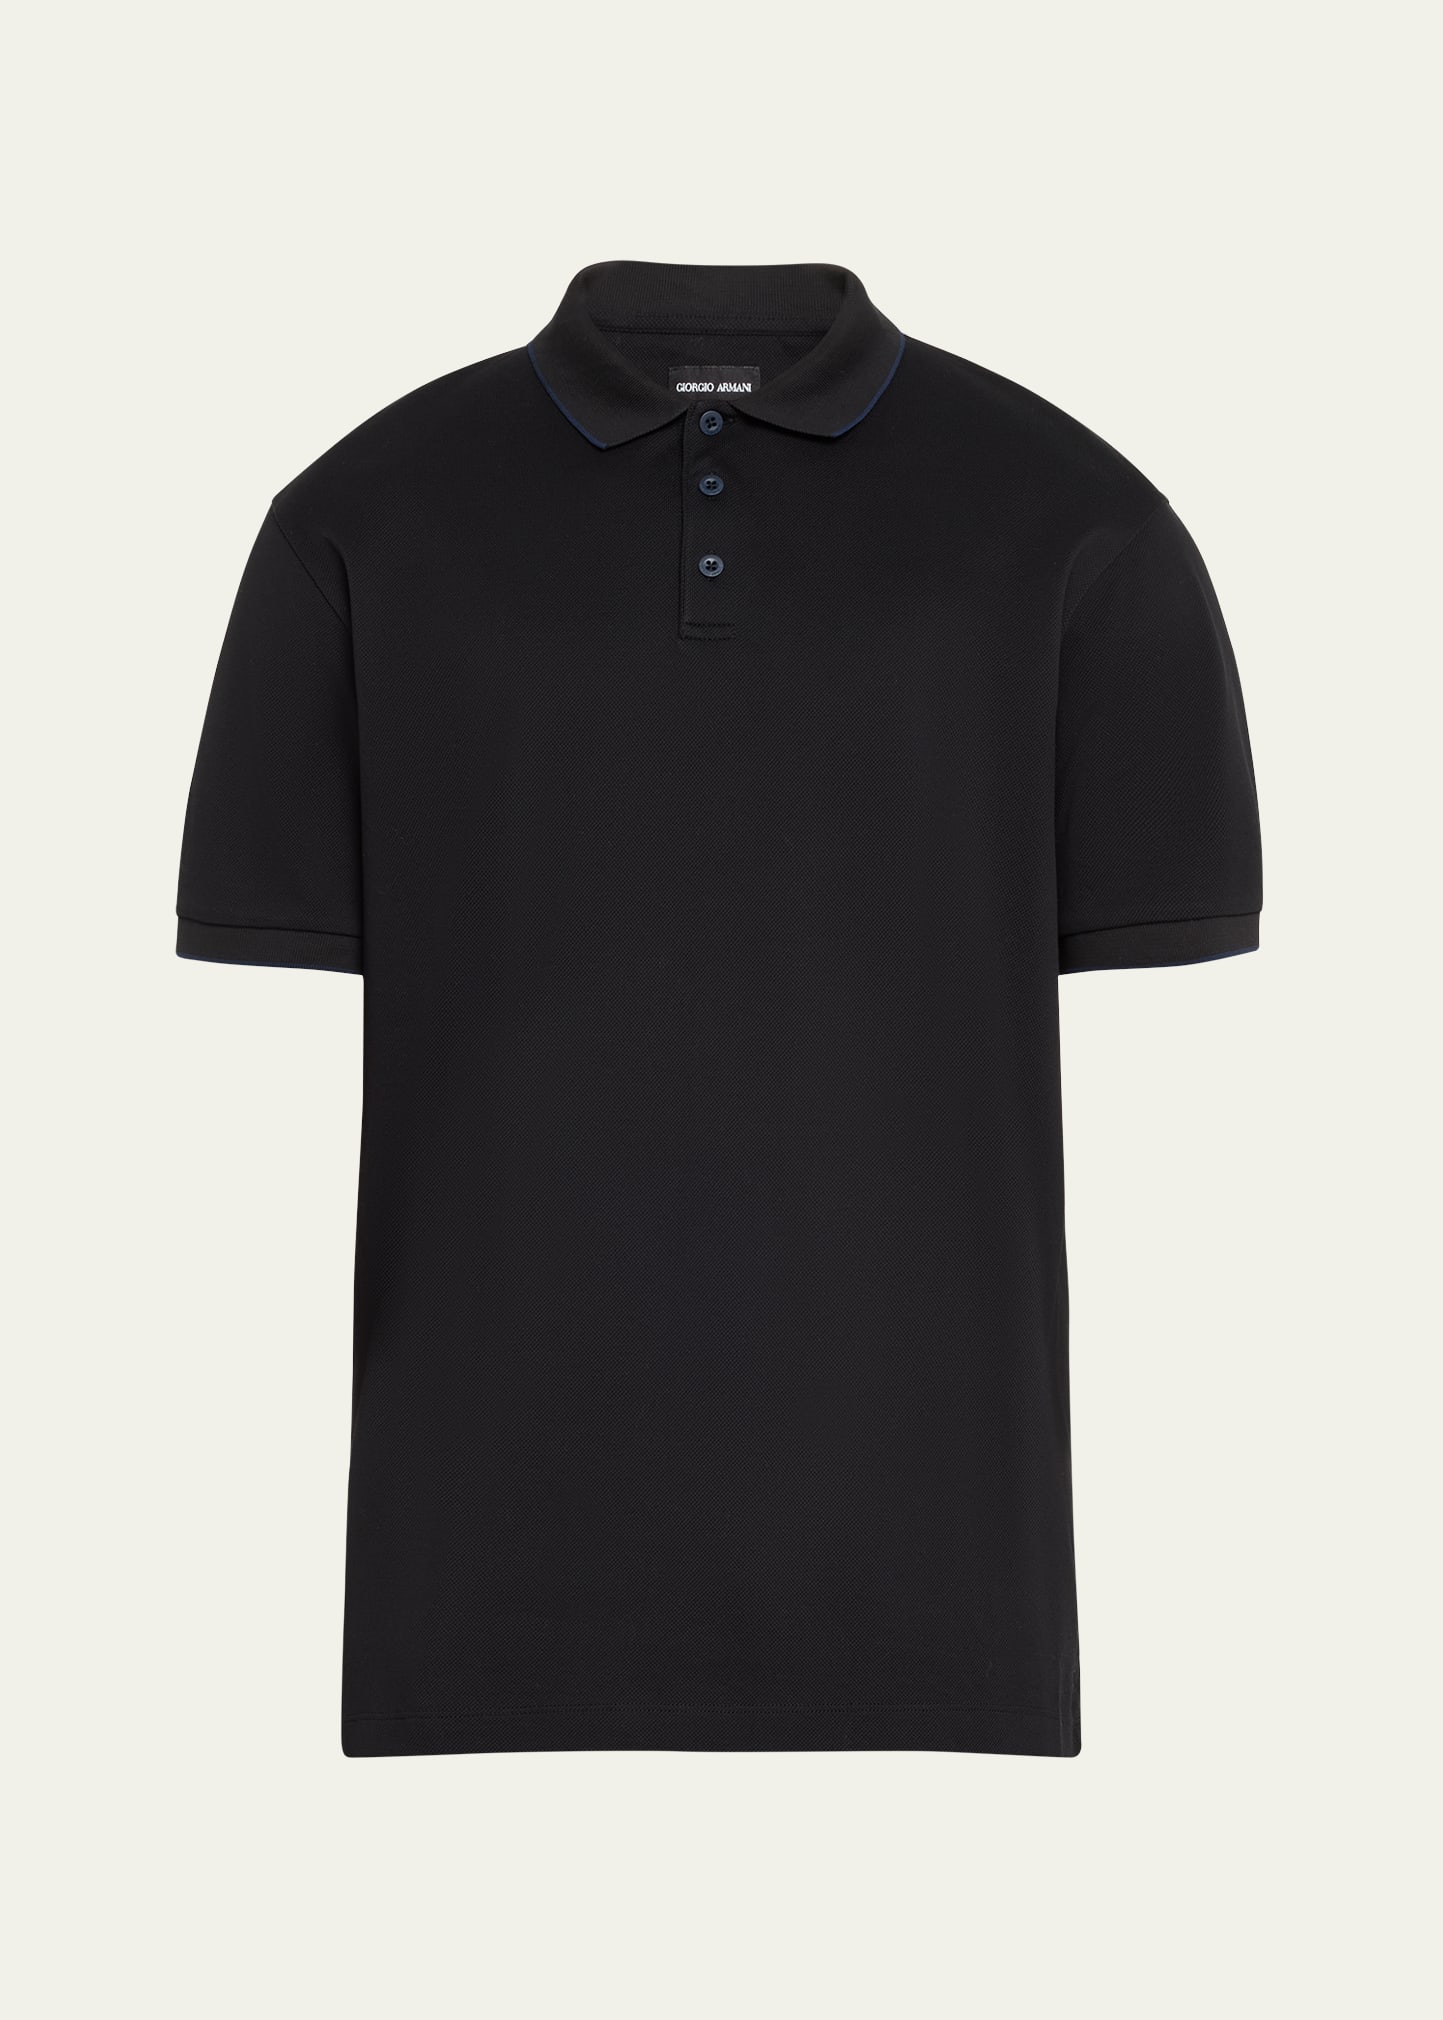 Giorgio Armani Men's Tipped Polo Shirt In Black